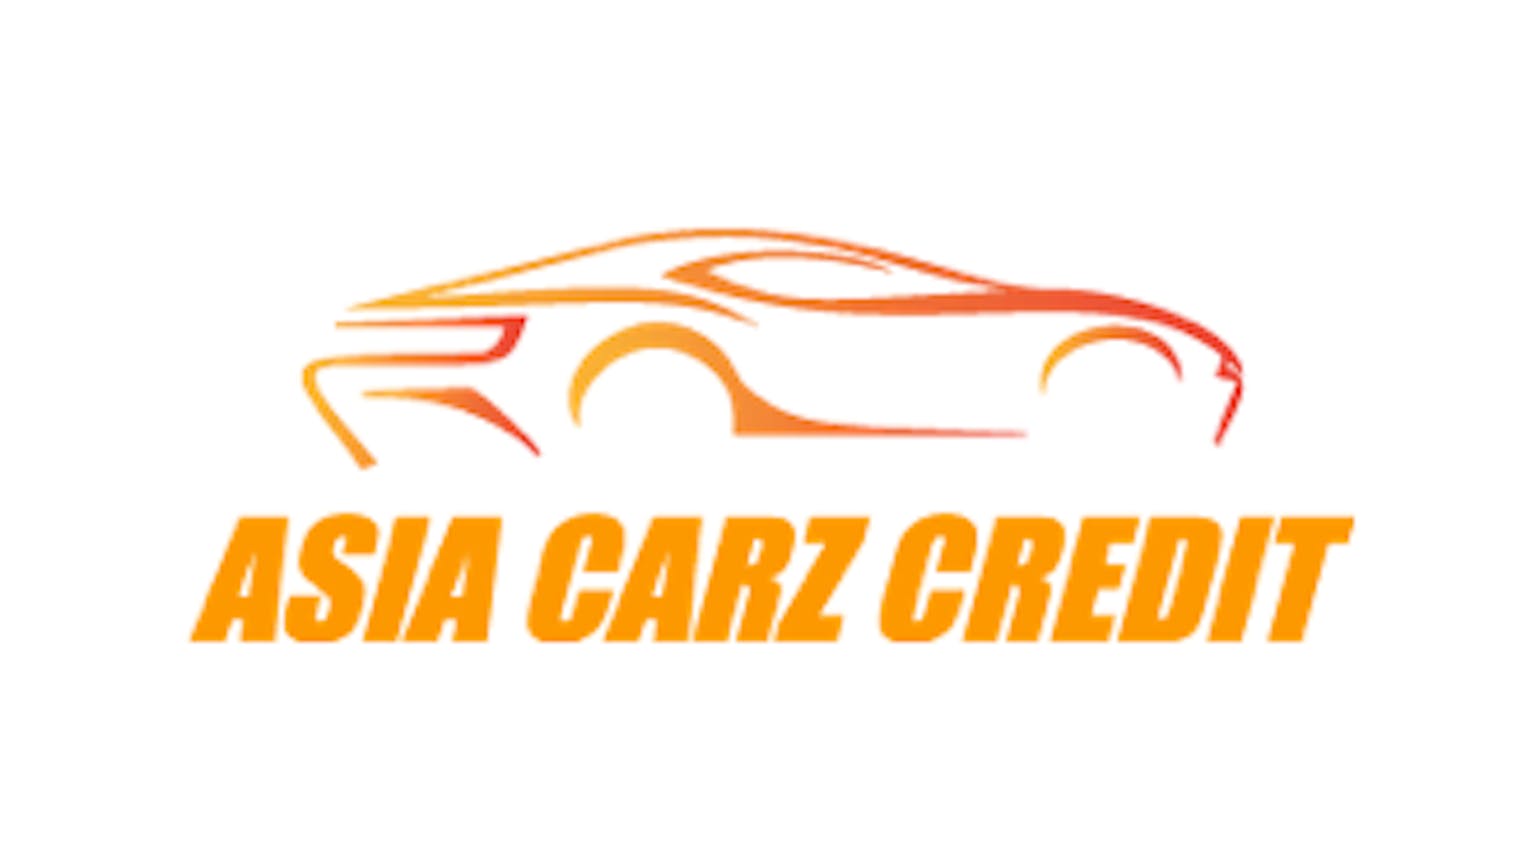 Asia Carz Credit